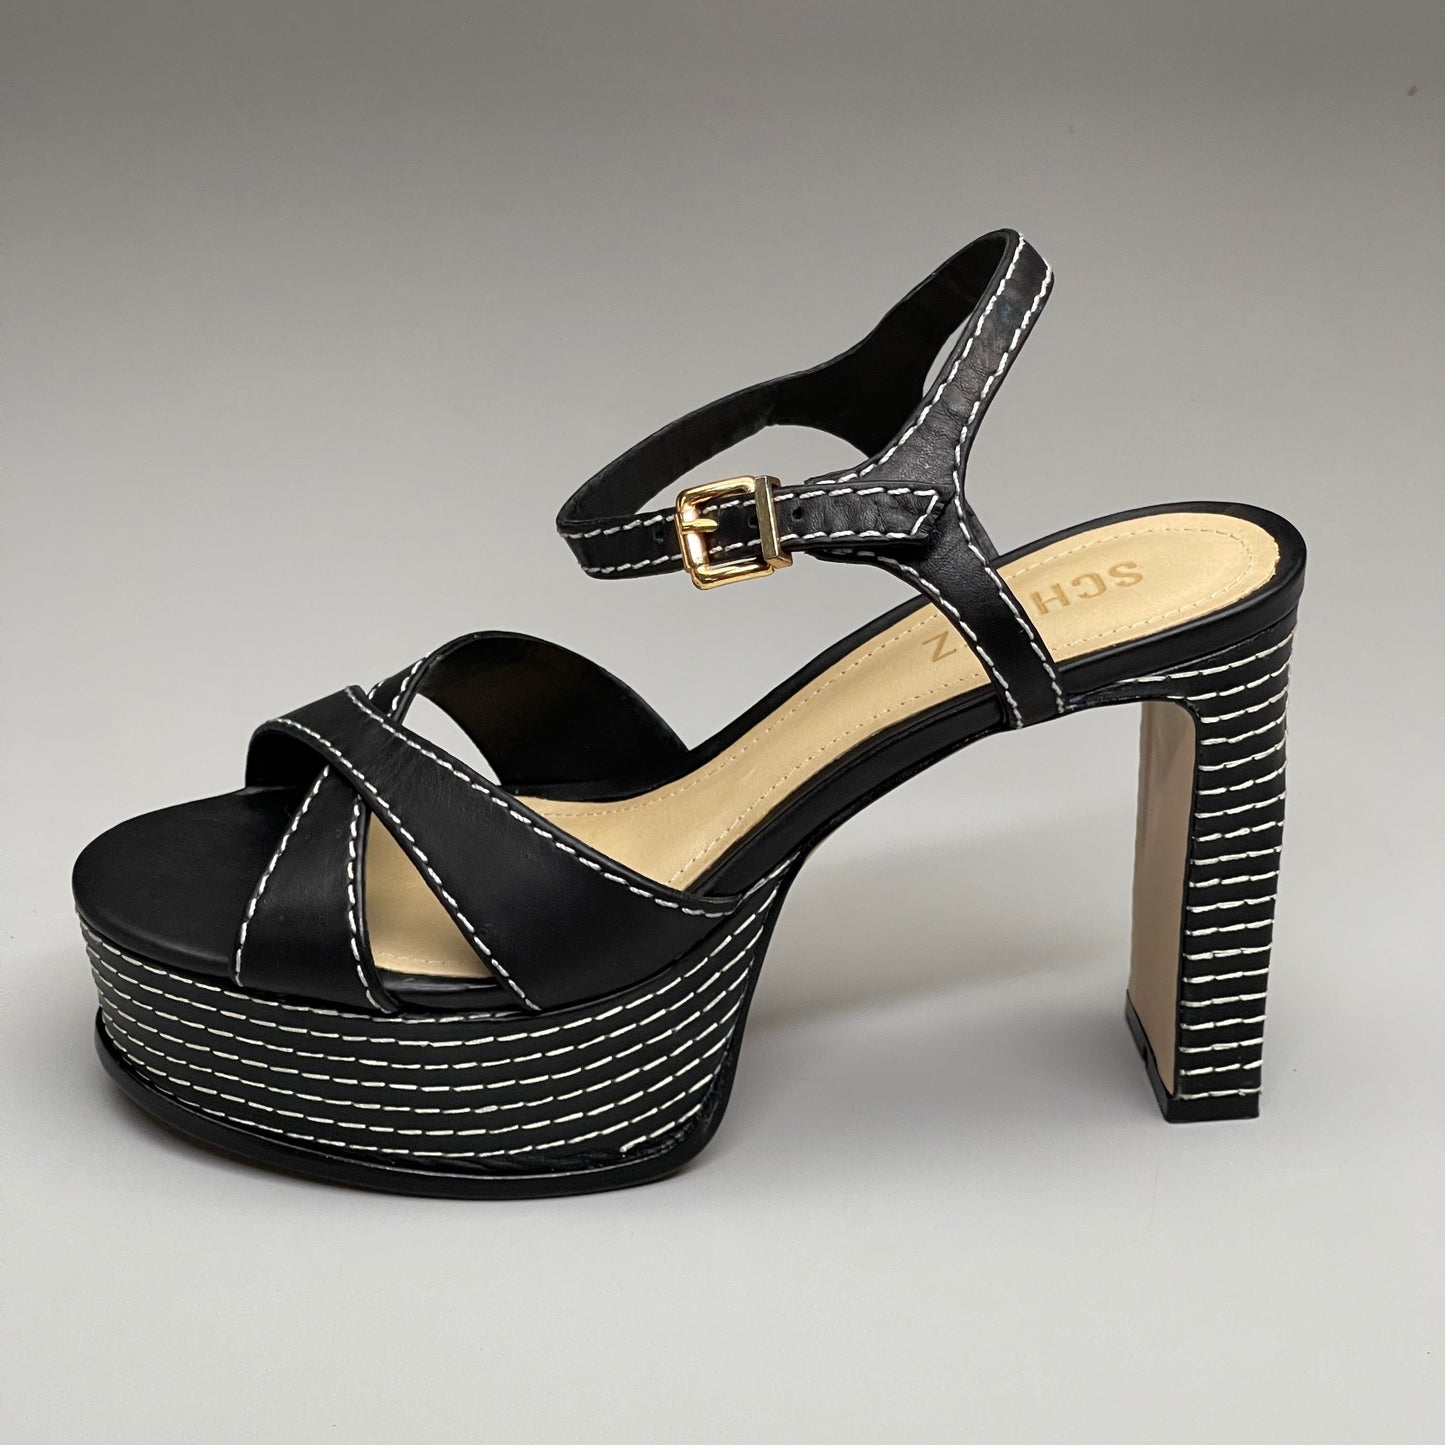 SCHUTZ Keefa Casual Women's Leather Sandal Black Platform 4" Heel Shoes Sz 8B (New)